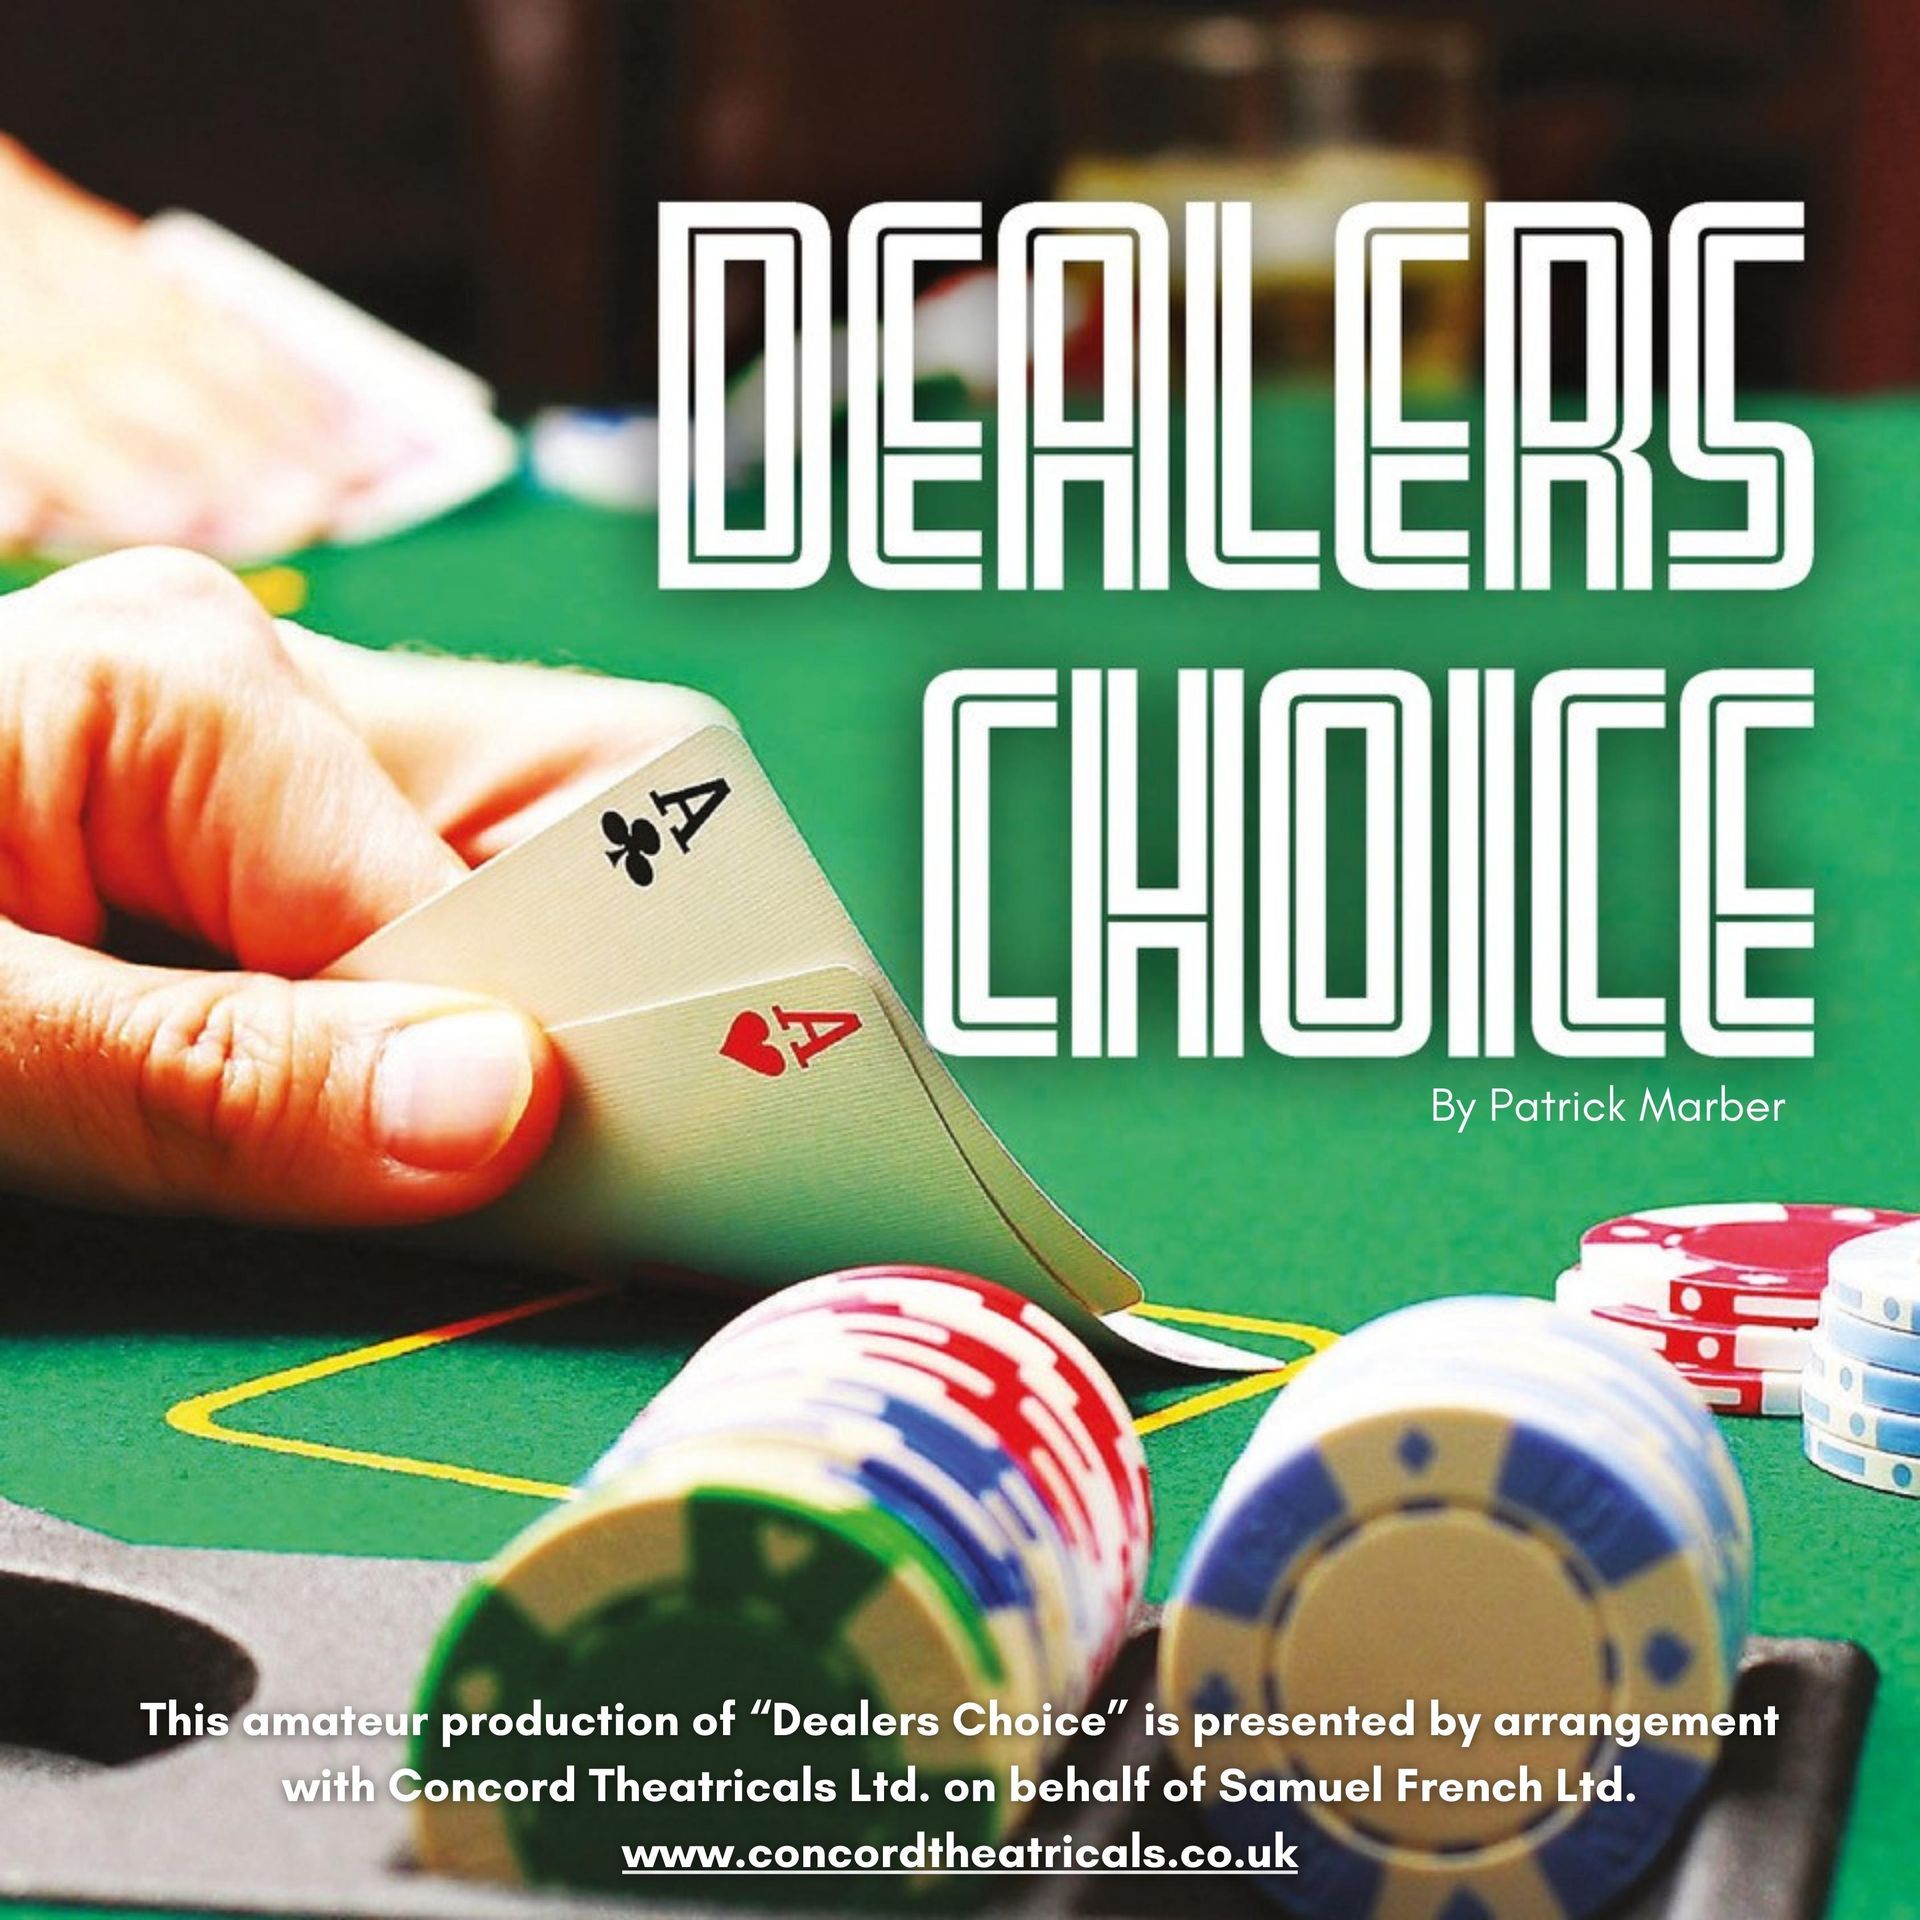 Poster advertising Dealer's Choice